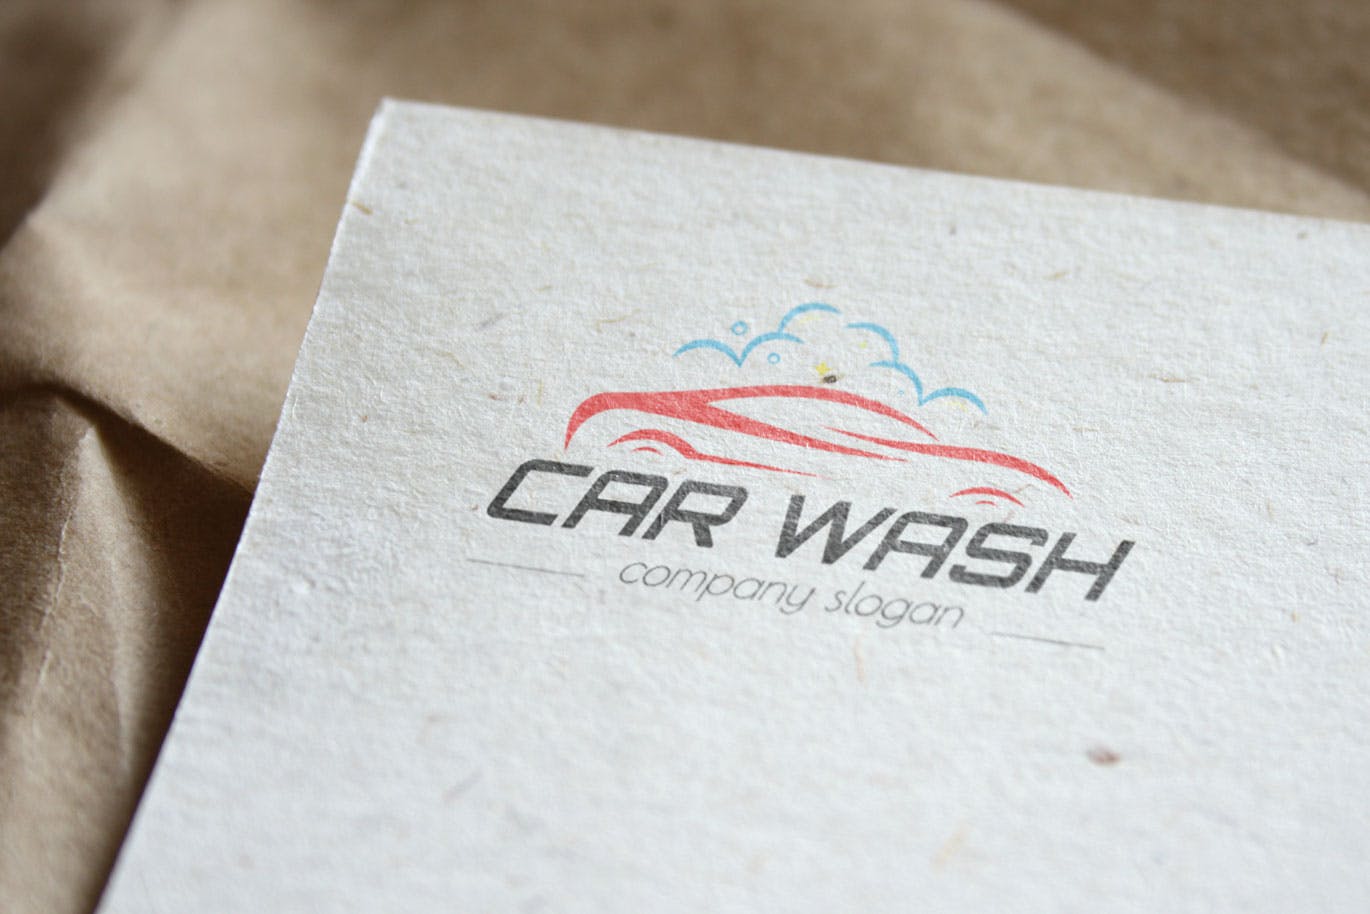 洗车店品牌Logo设计16图库精选模板 Car Wash Business Logo Template插图(3)